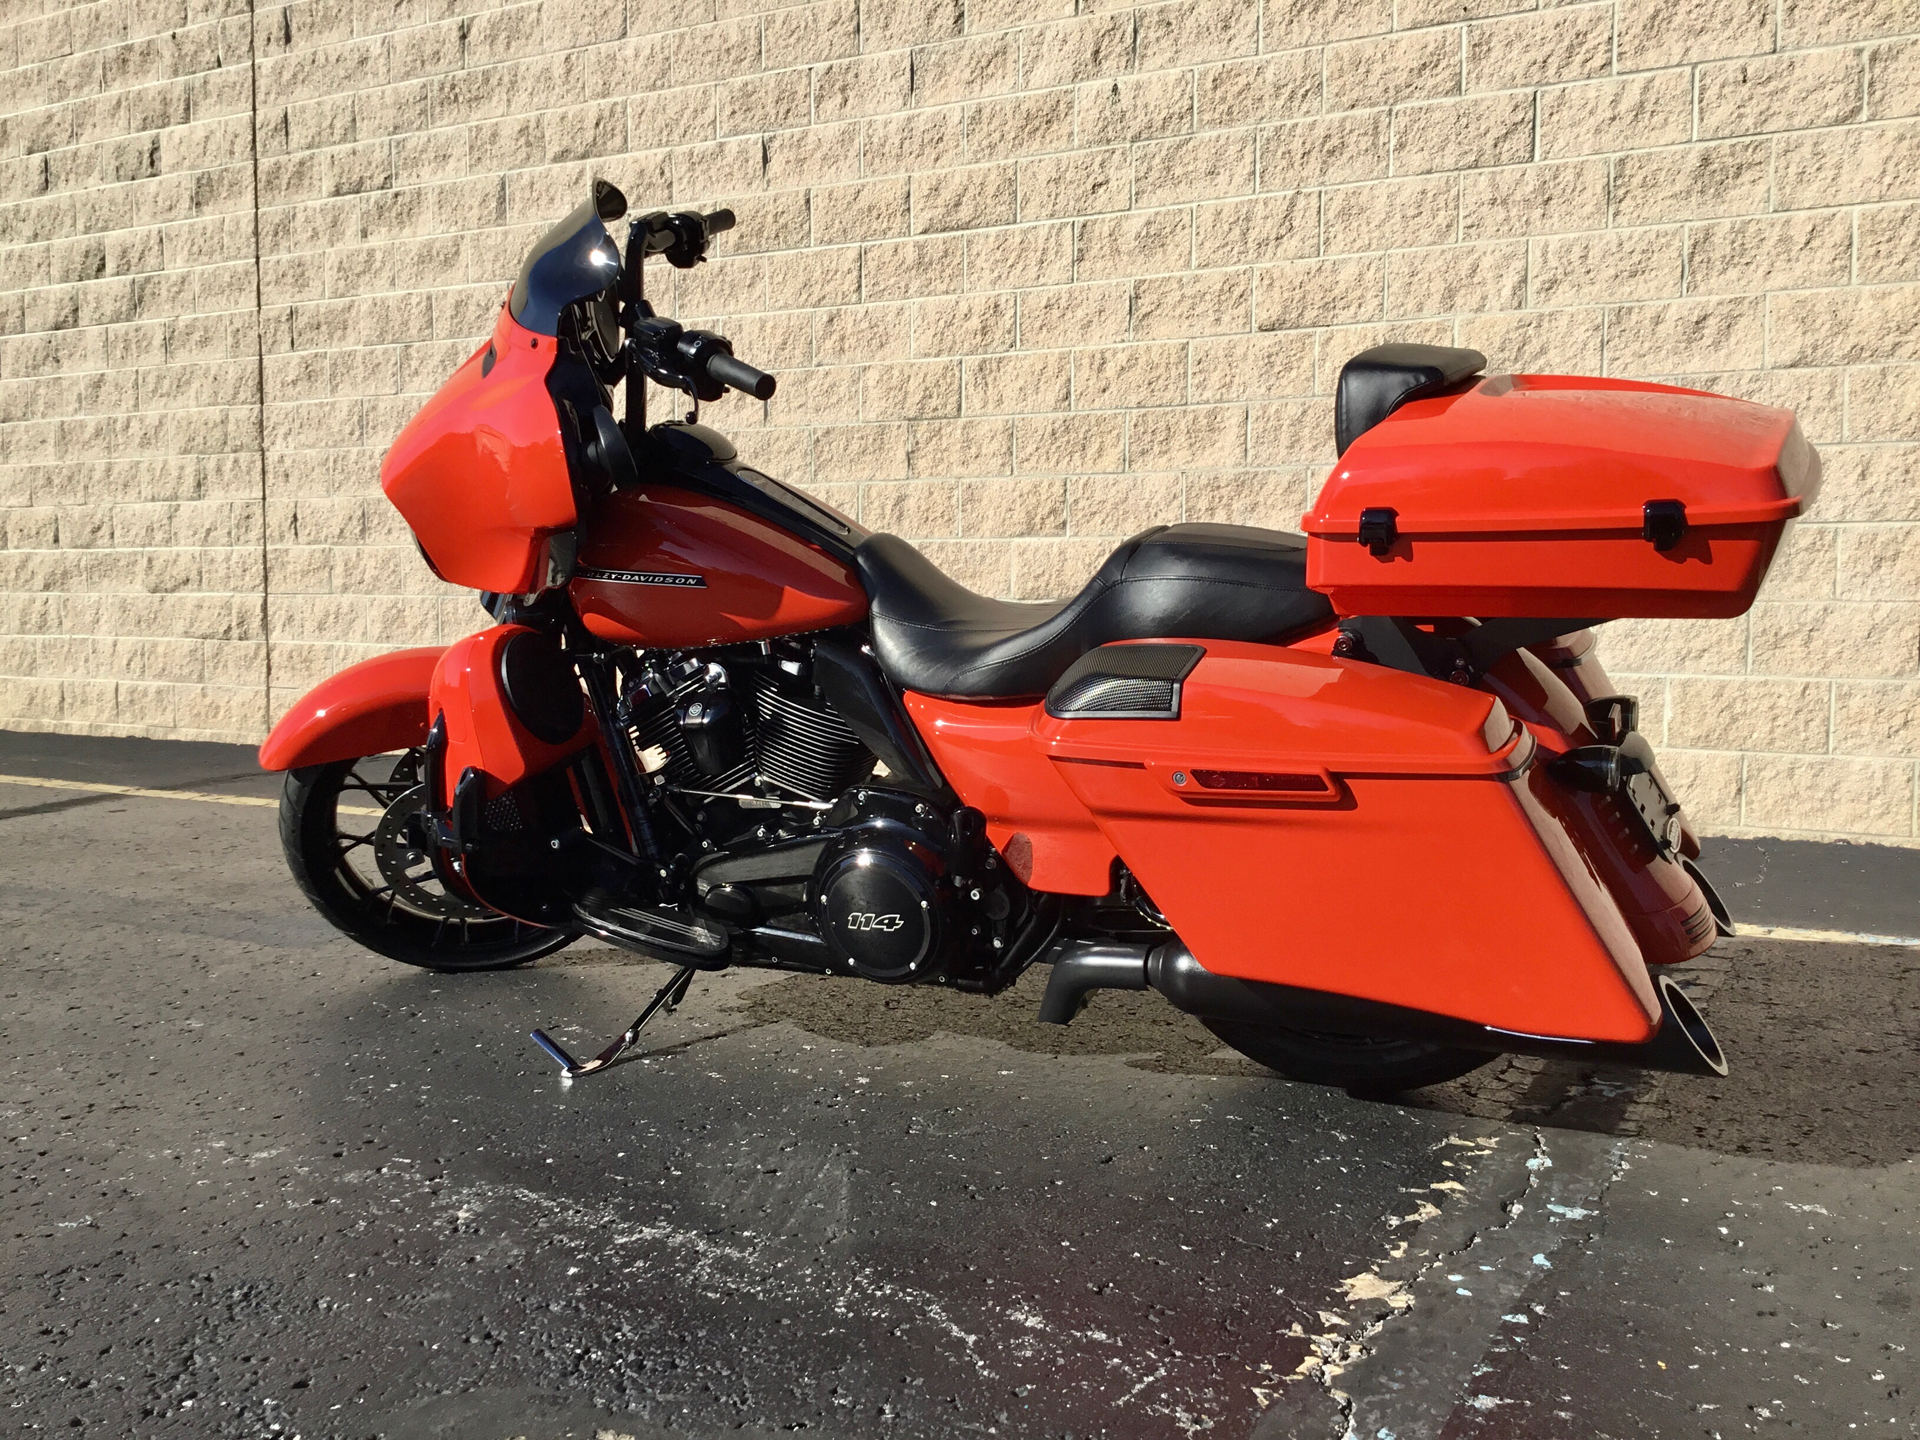 2020 Harley-Davidson Street Glide® Special in Monroe, Michigan - Photo 3